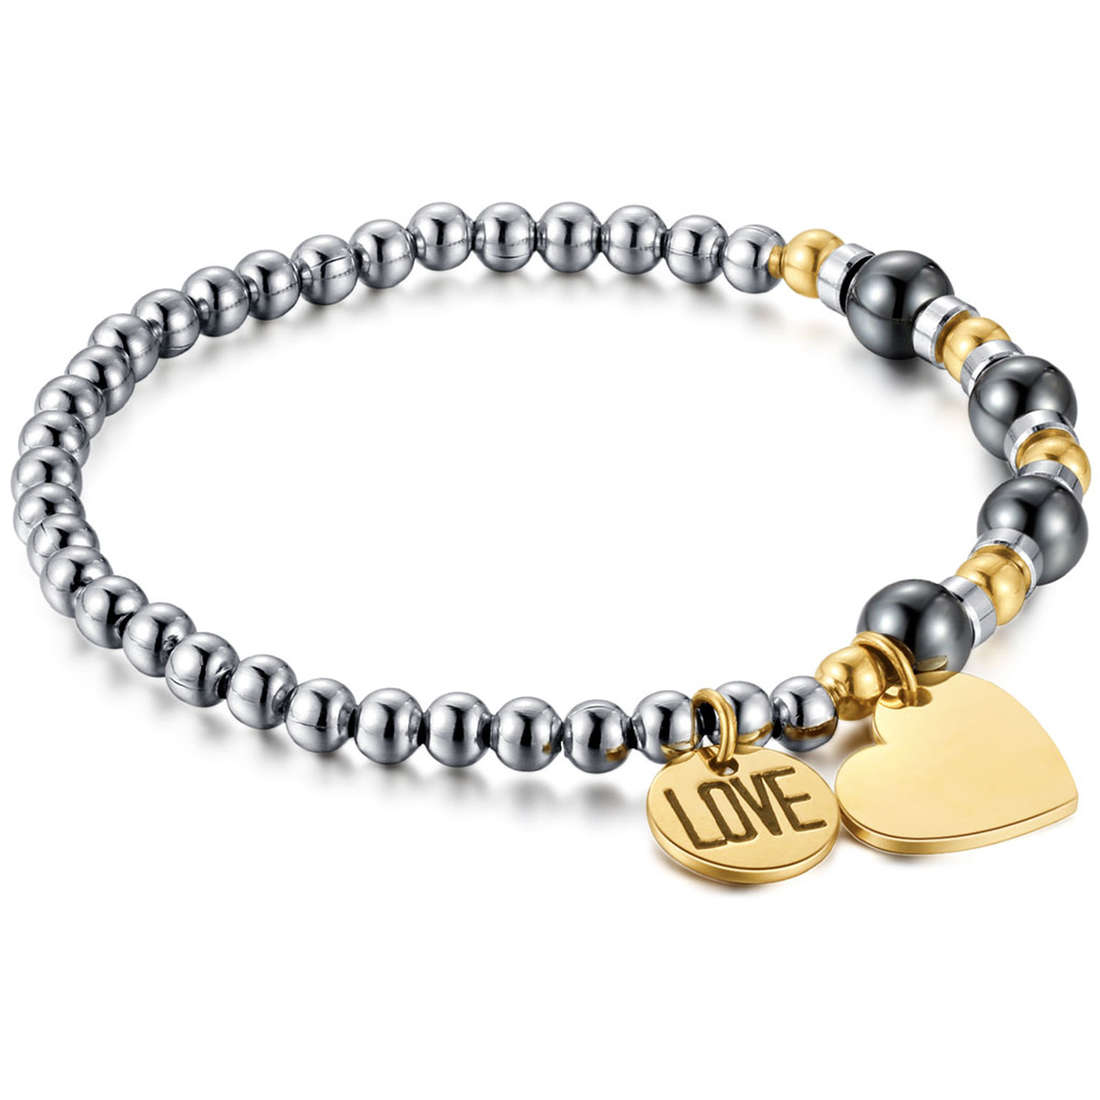 bracelet bijou Acier femme bijou Cristaux SHAG02